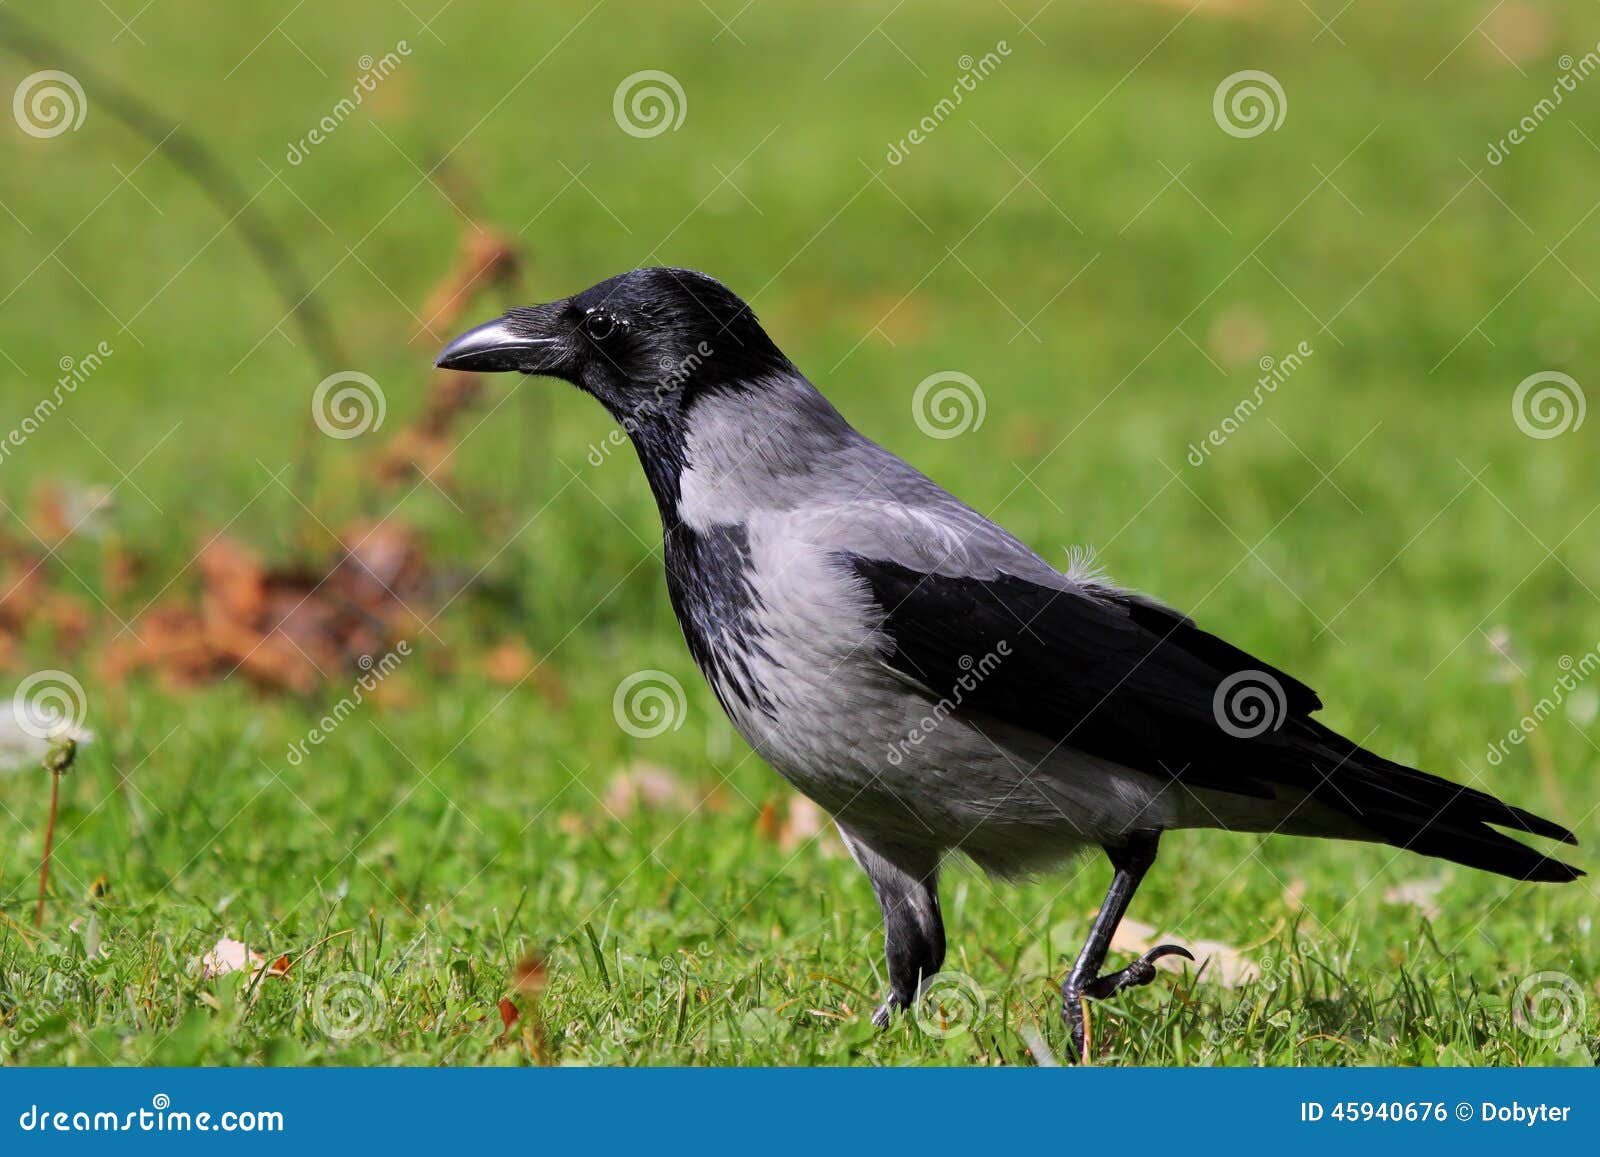 hooded crow (corvus cornix).